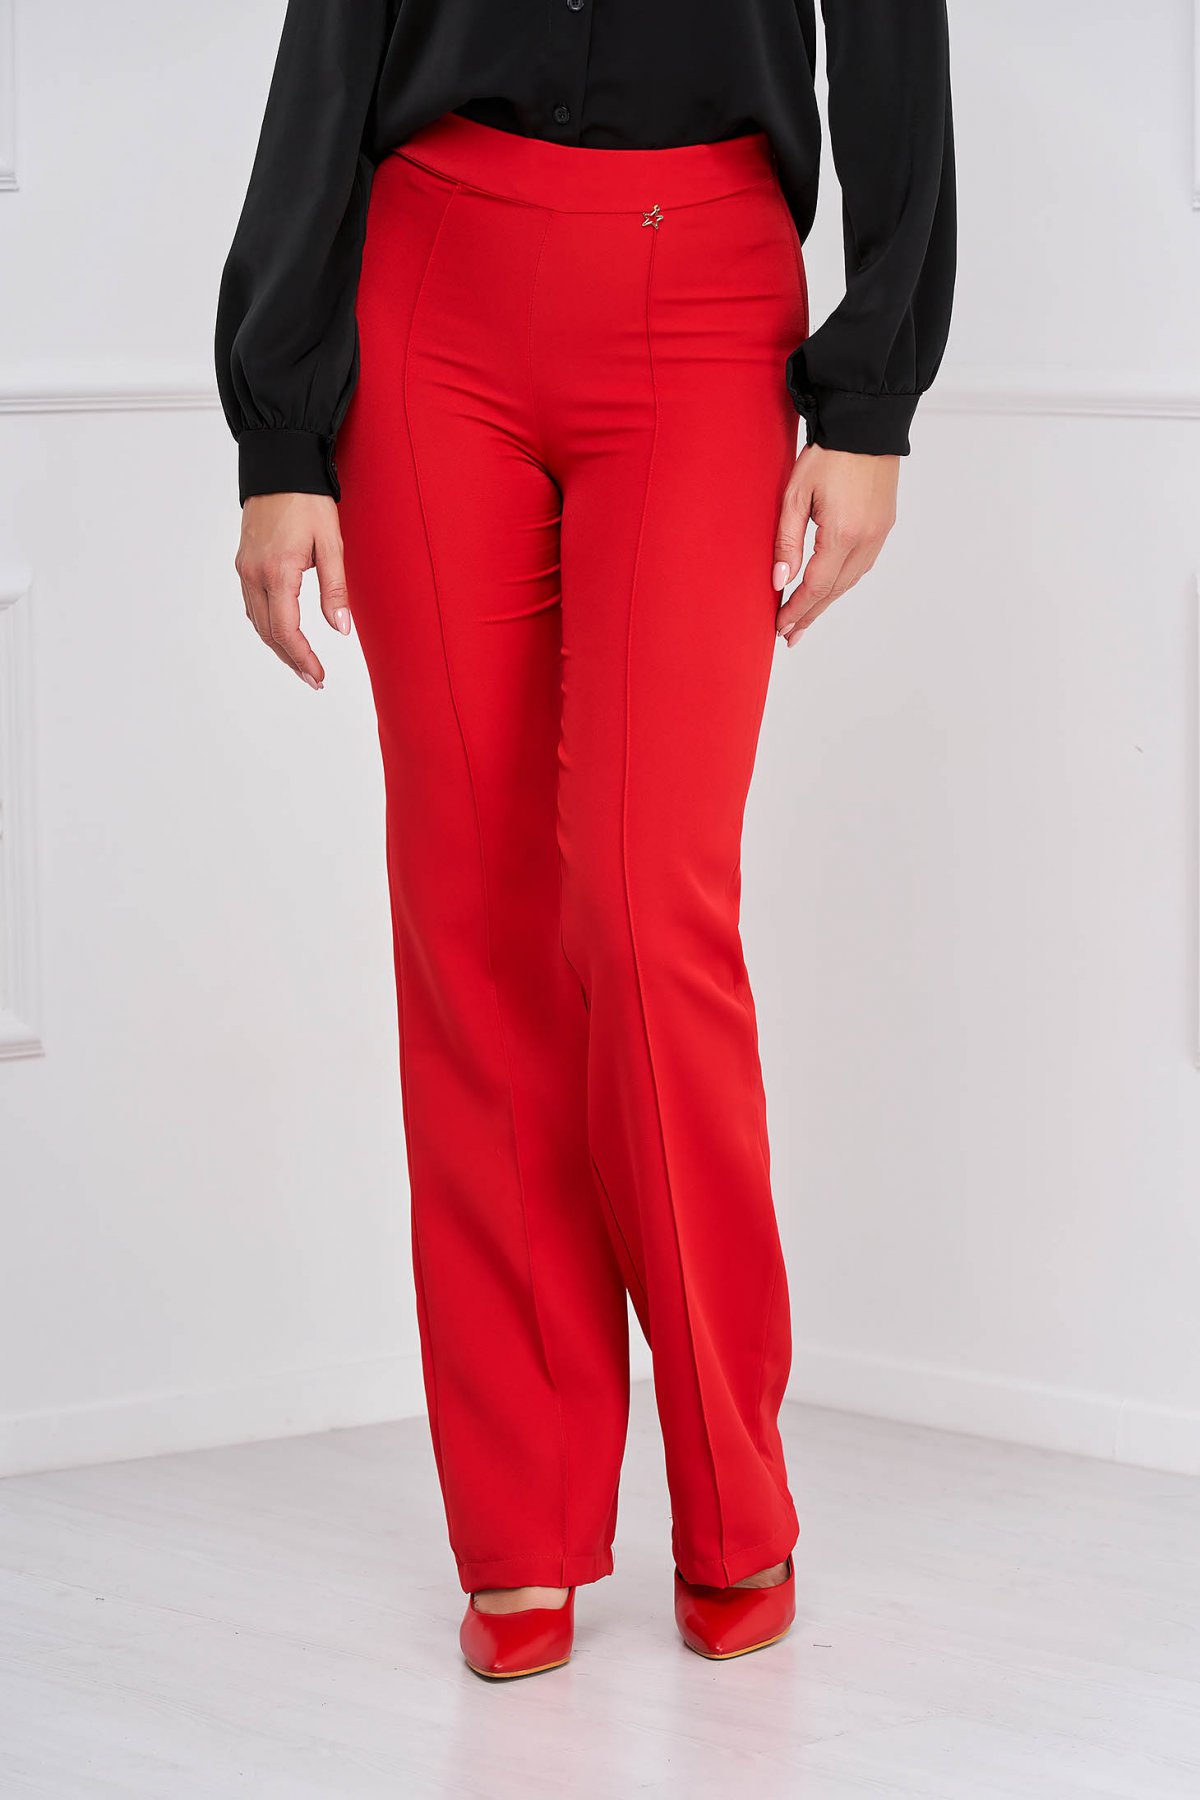 Pantaloni din stofa elastica rosii lungi evazati - StarShinerS